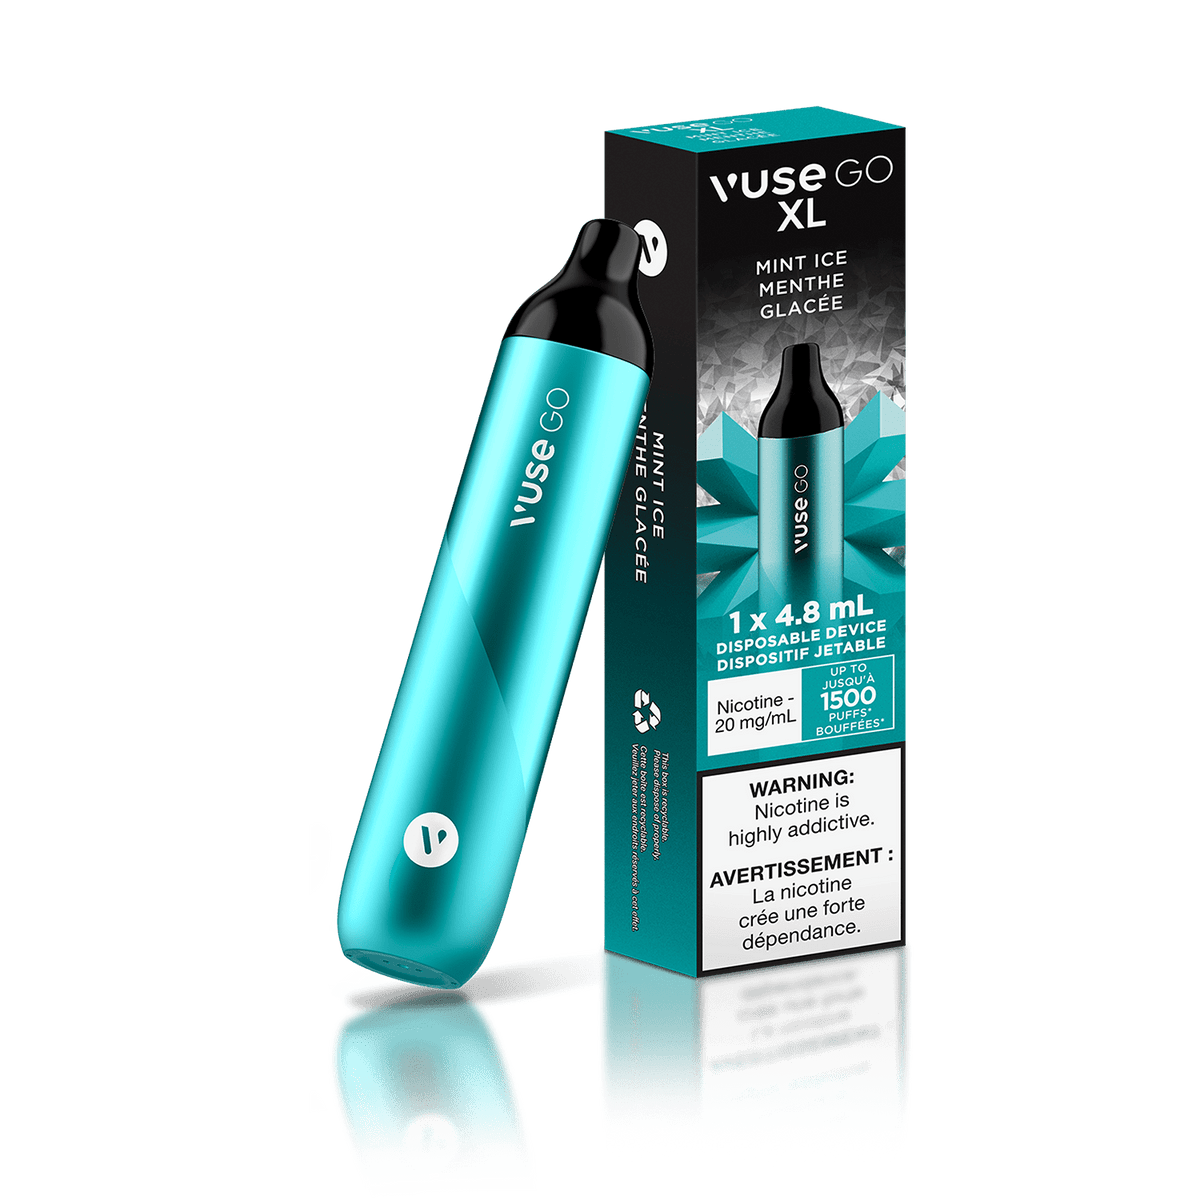 Vuse GO XL Disposable Vape - Mint Ice available on Canada online vape shop